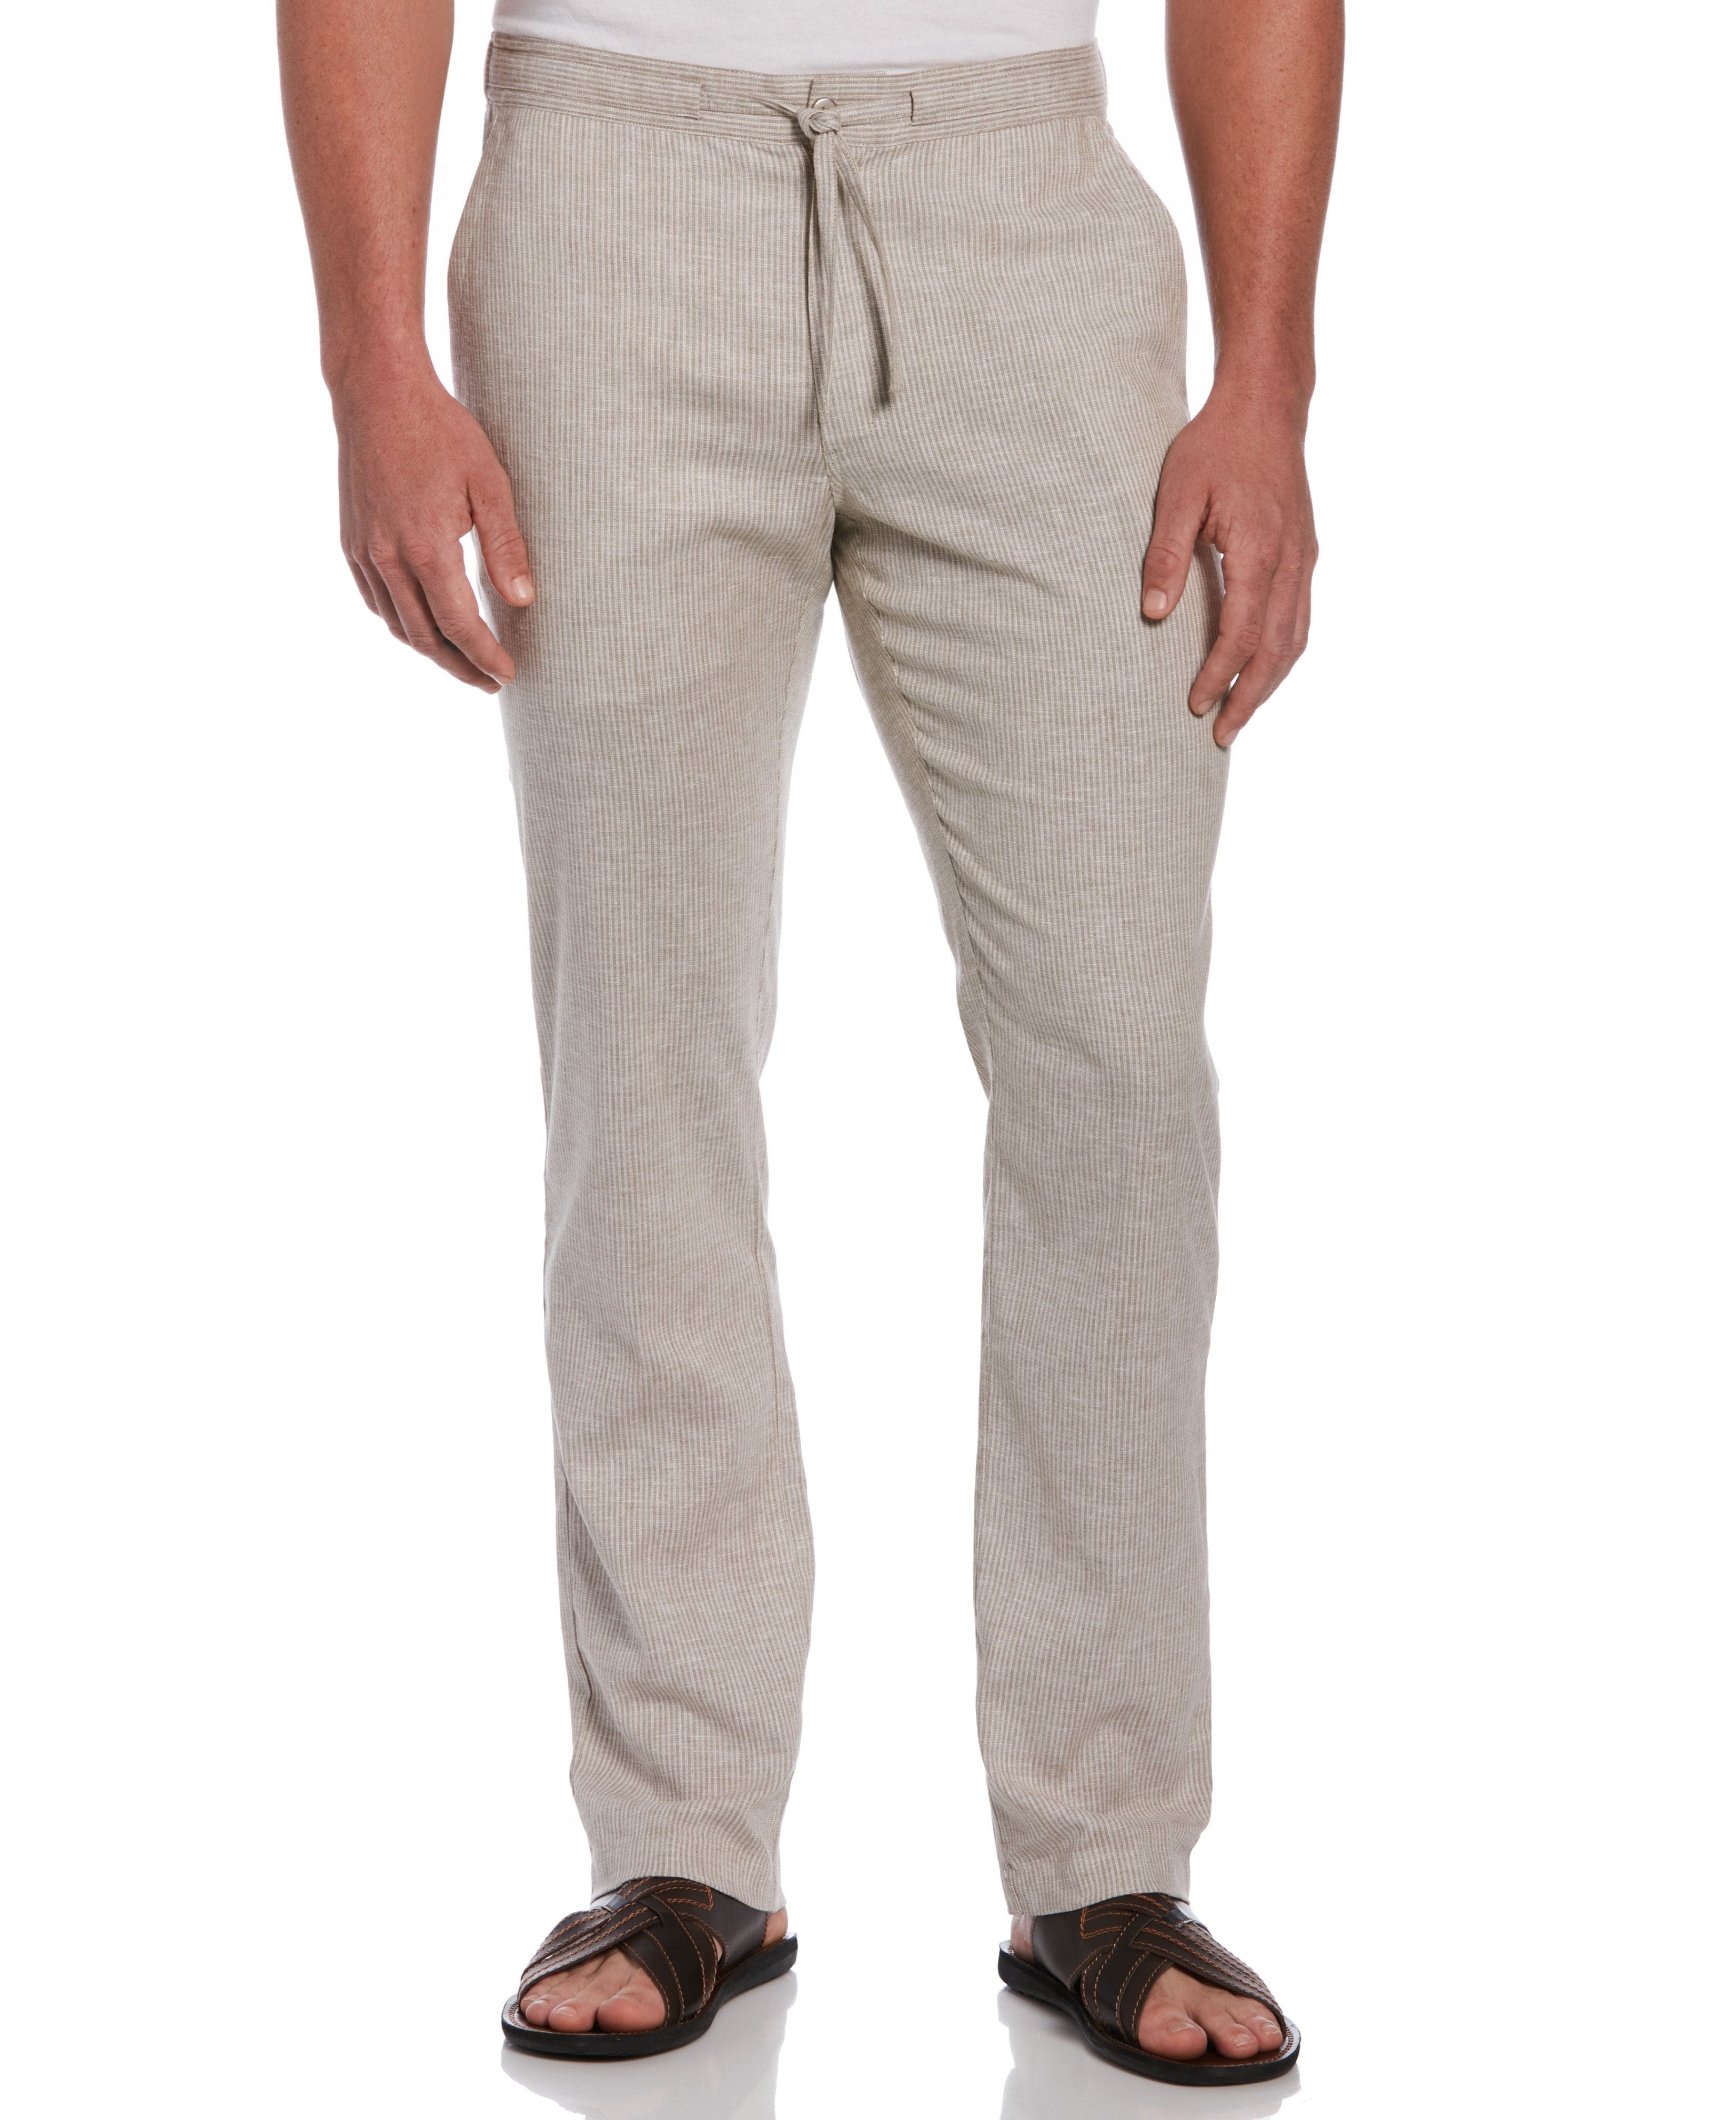 Linen-Blend Drawstring Pants